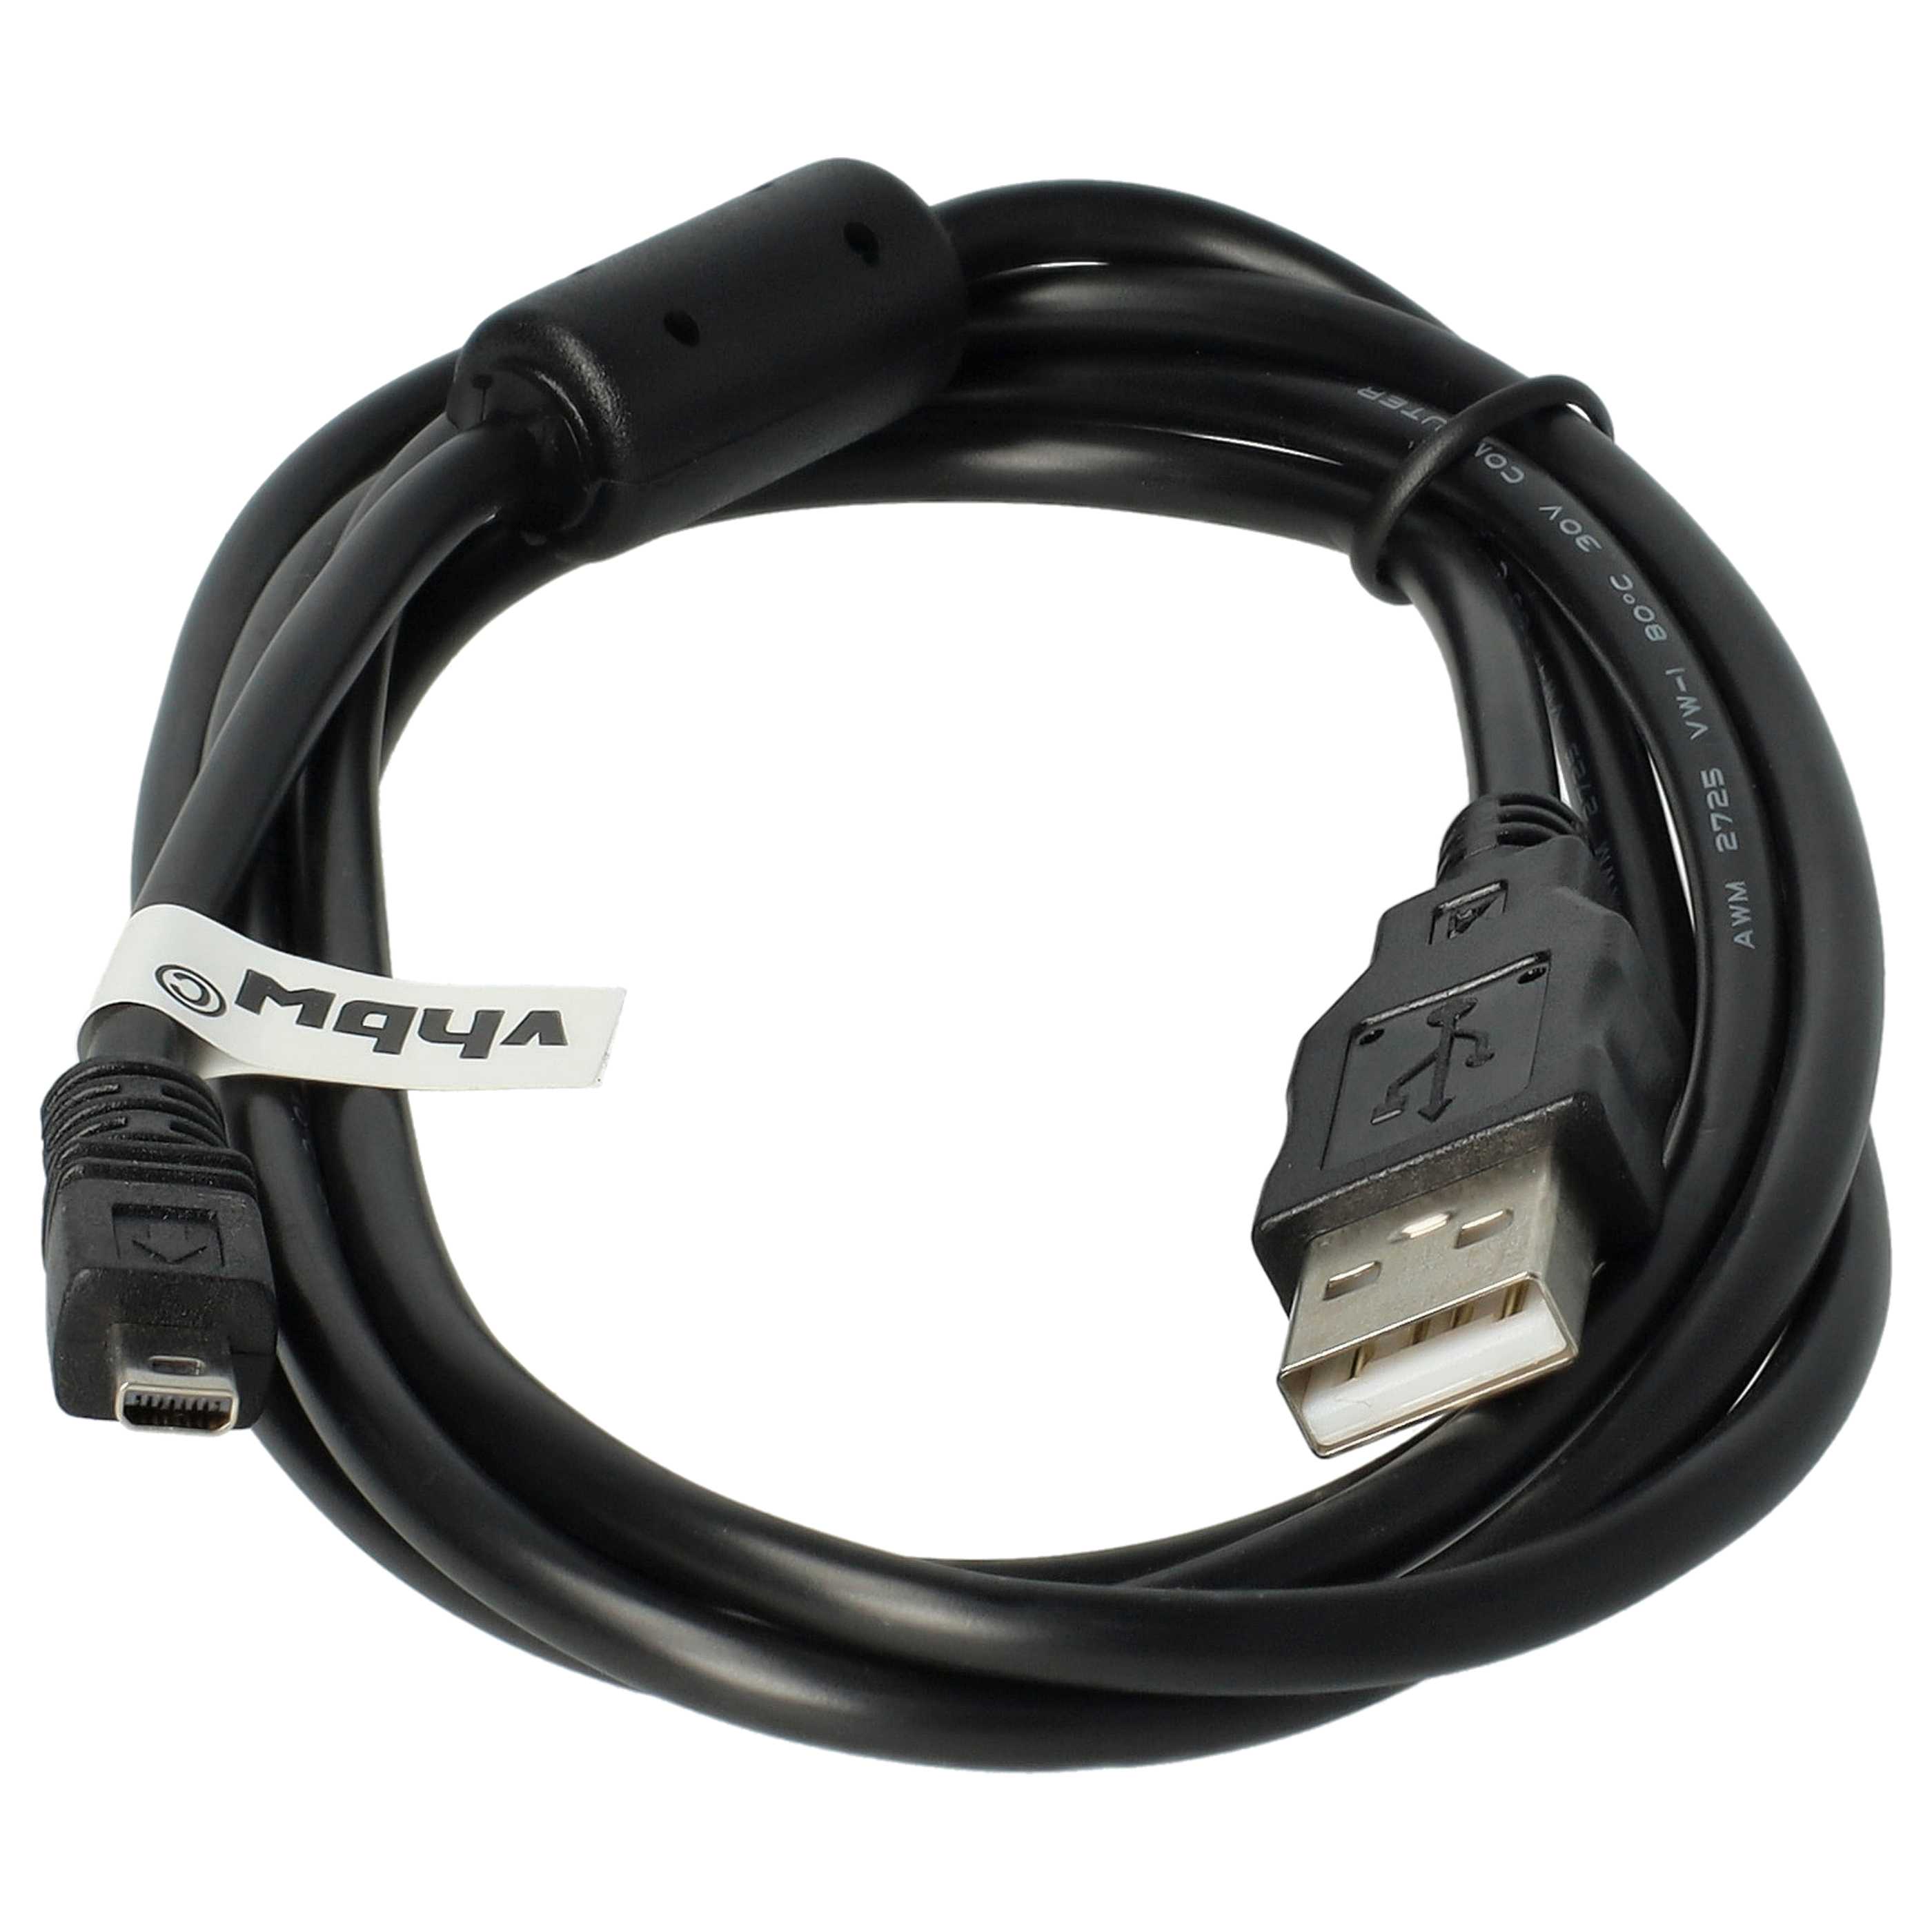 Cable de datos USB reemplaza Casio EMC-5U para cámaras Pentax - 150 cm